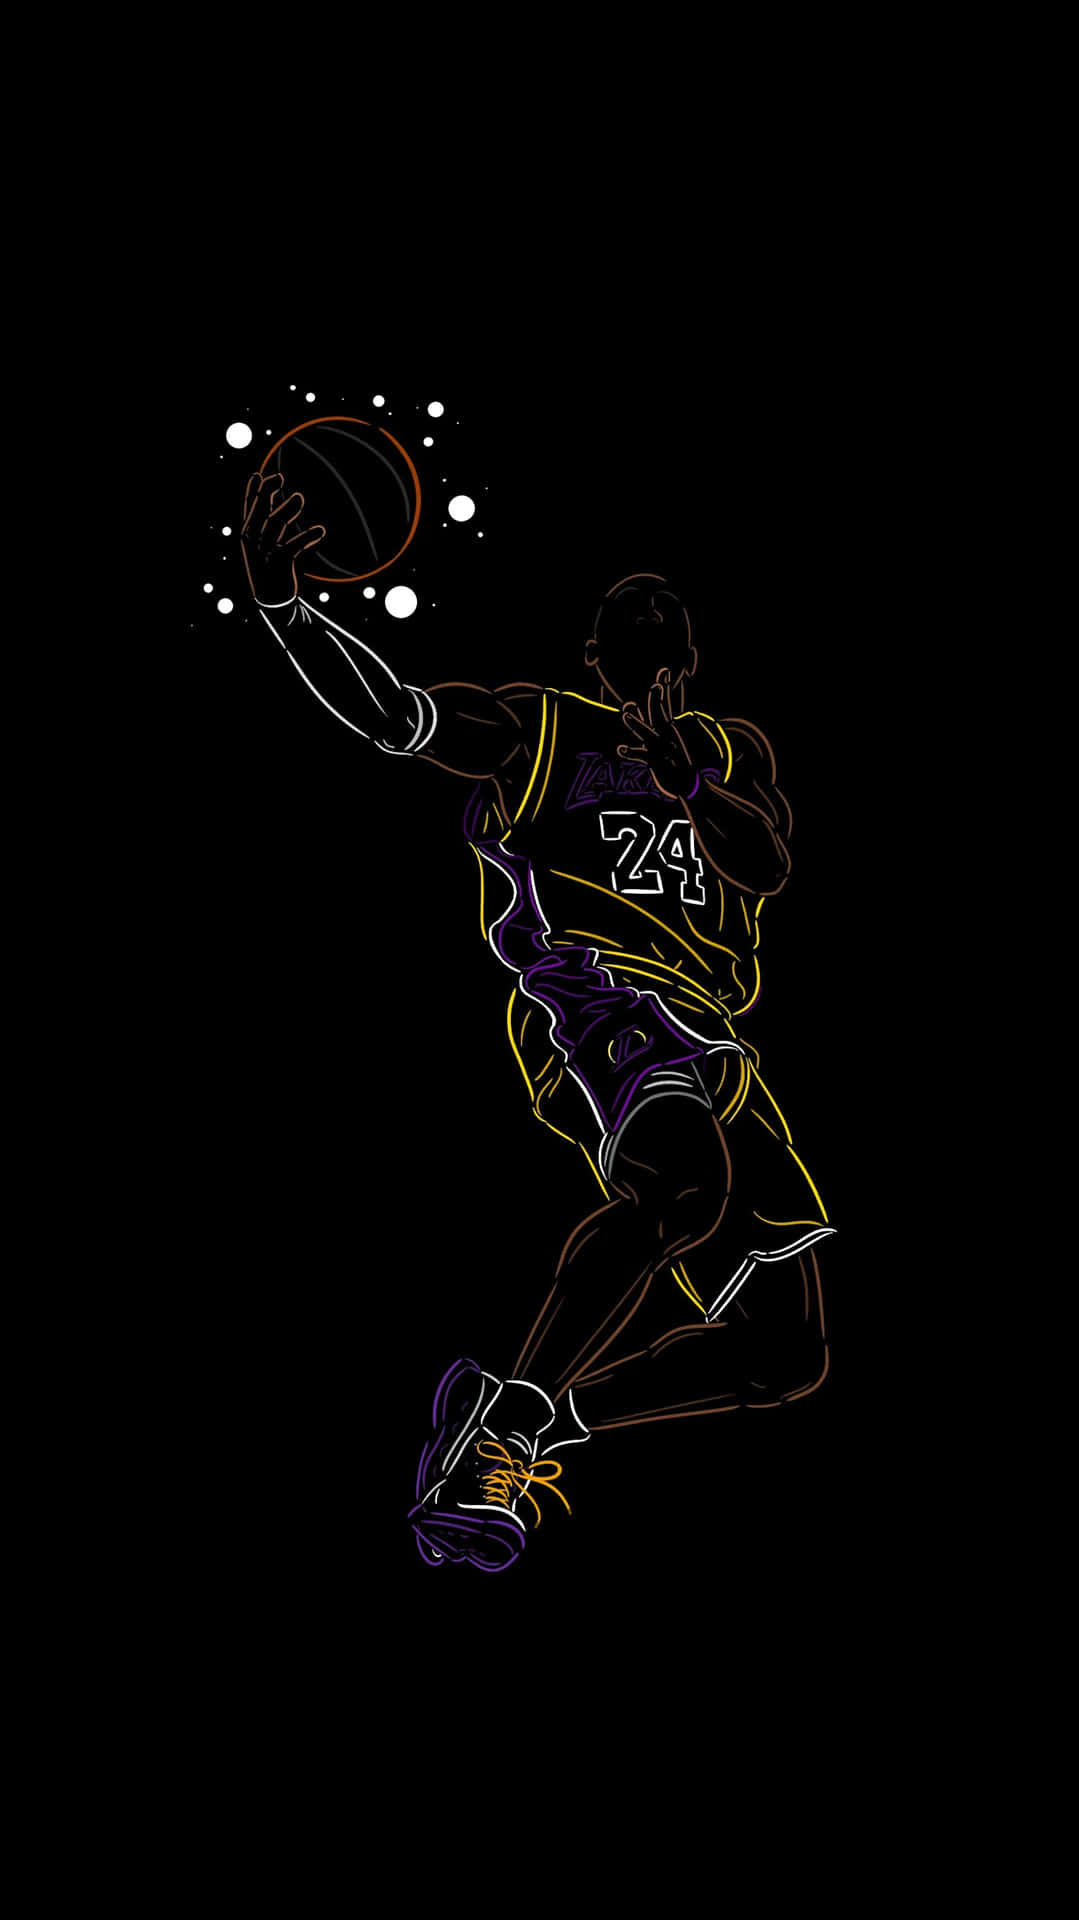 Kobe Bryant, the Legend